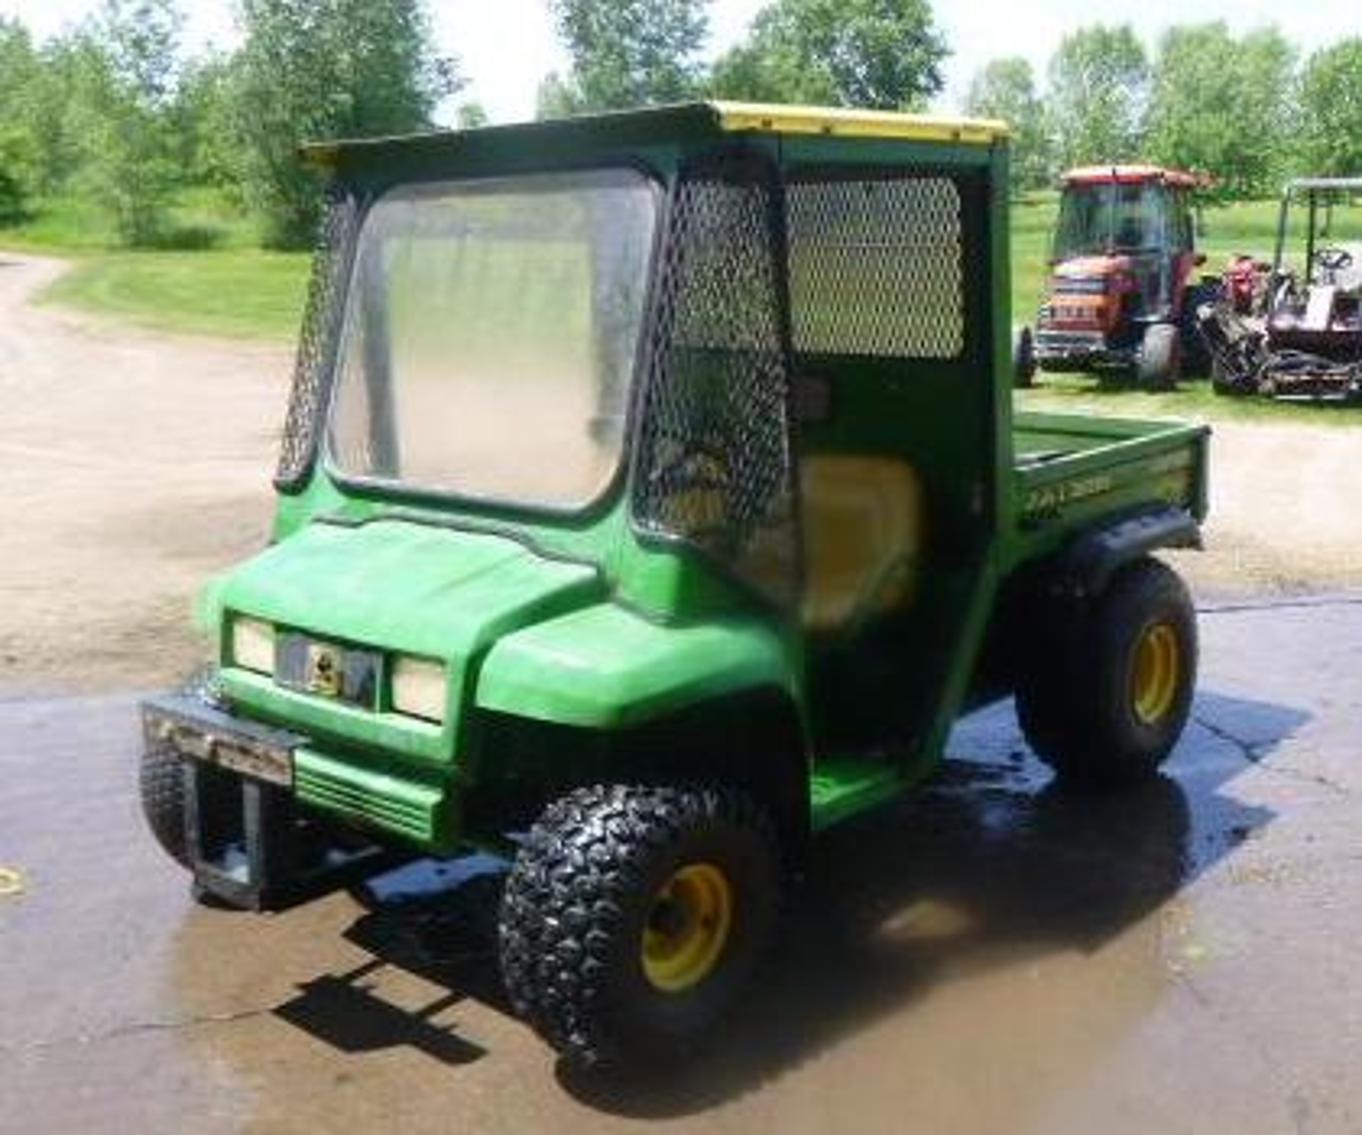 Kubota M4900 Utility Special, Toro Lawn Mowers, John Deere Gator, Golf Cart & More